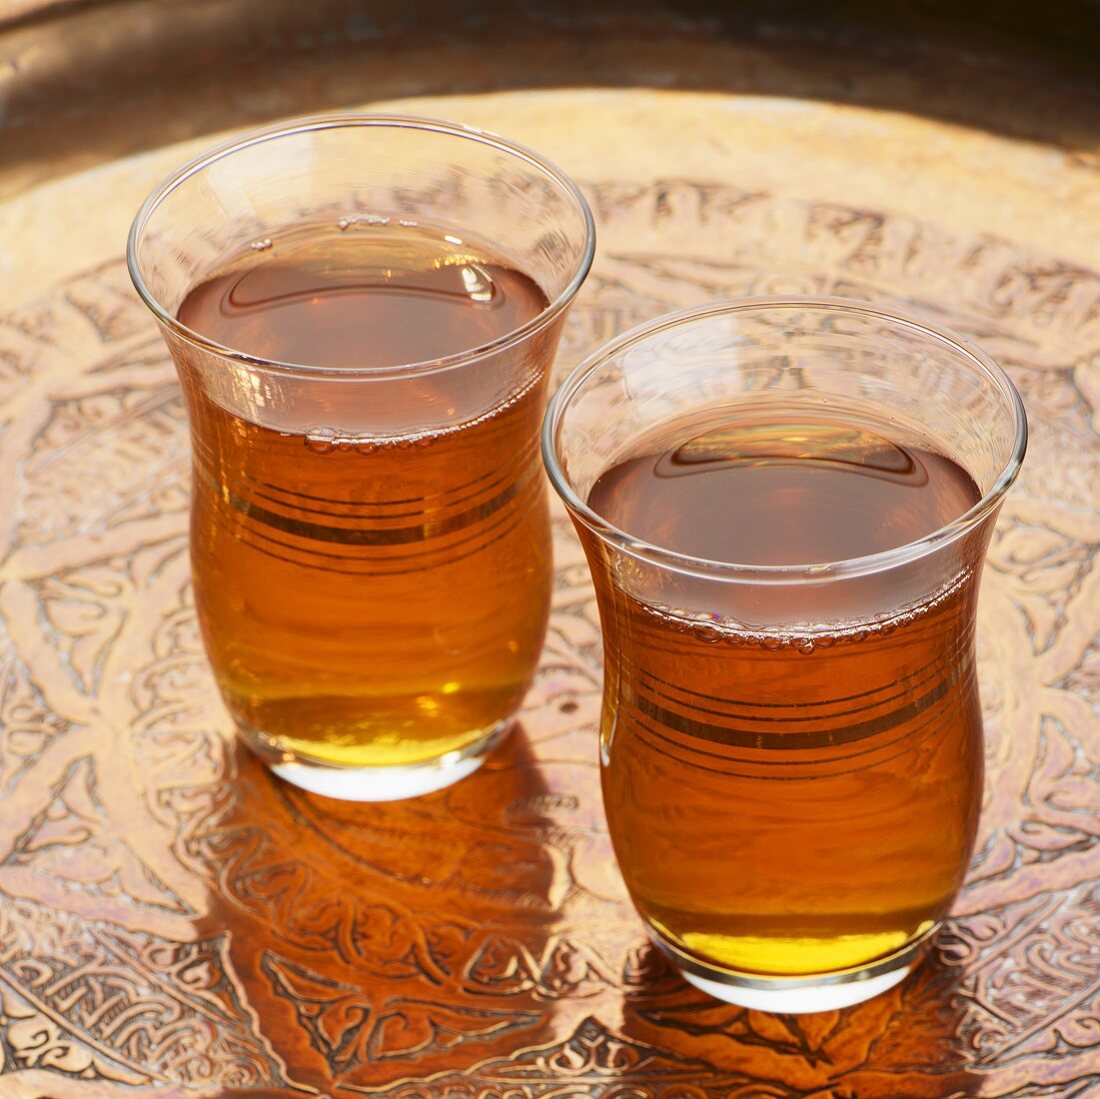 Two glasses of Turkish tea